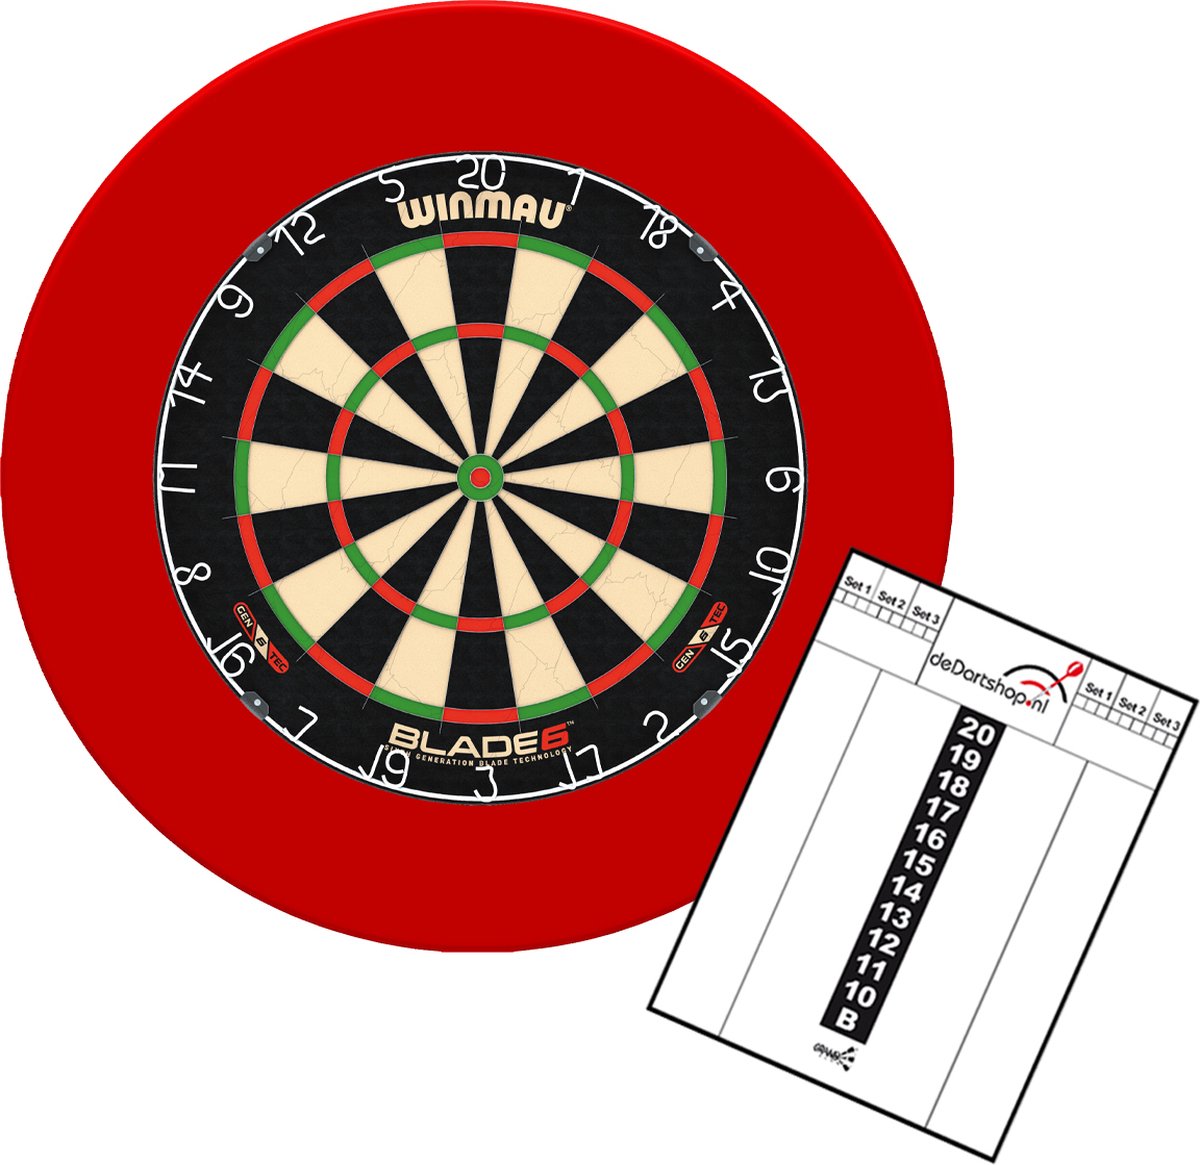 Dragon Darts - Winmau Blade 6 dartbord - Dartbord surround ring - Scorebord - Rood